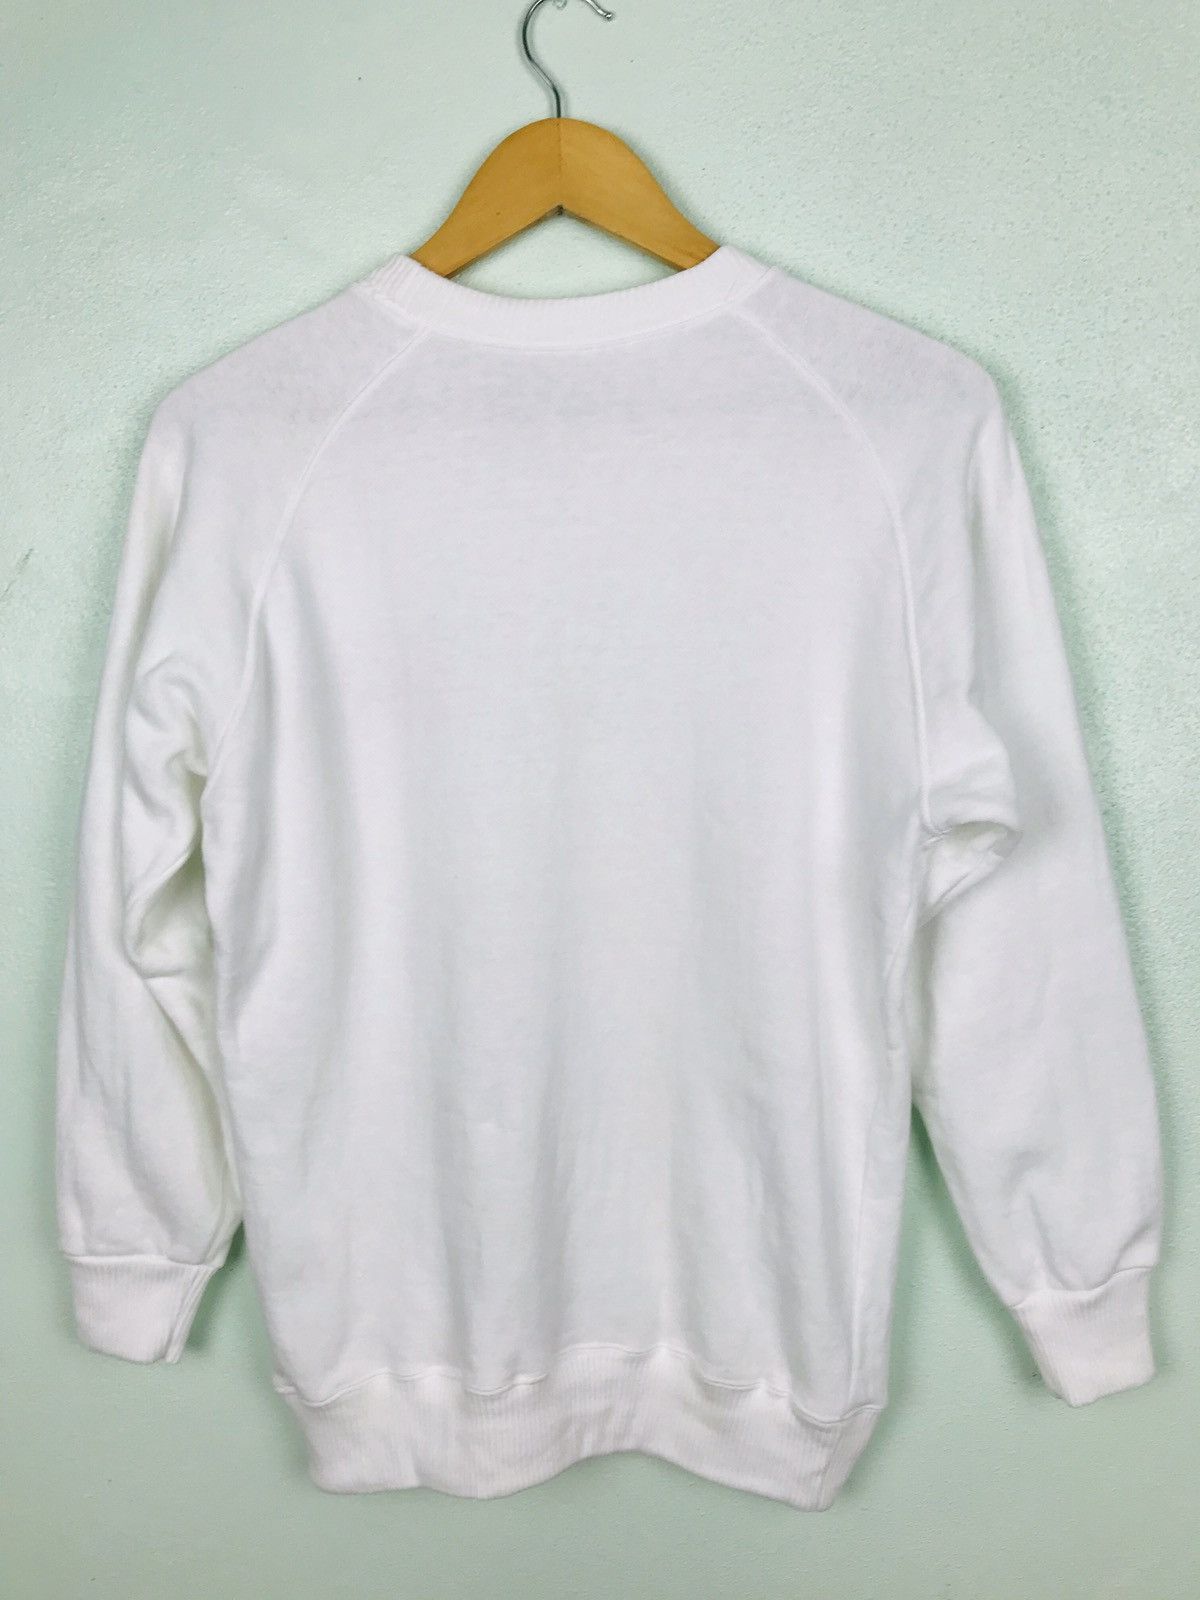 LAST DROP!! Vintage yamaha sweatshirt - gh0120 - 4